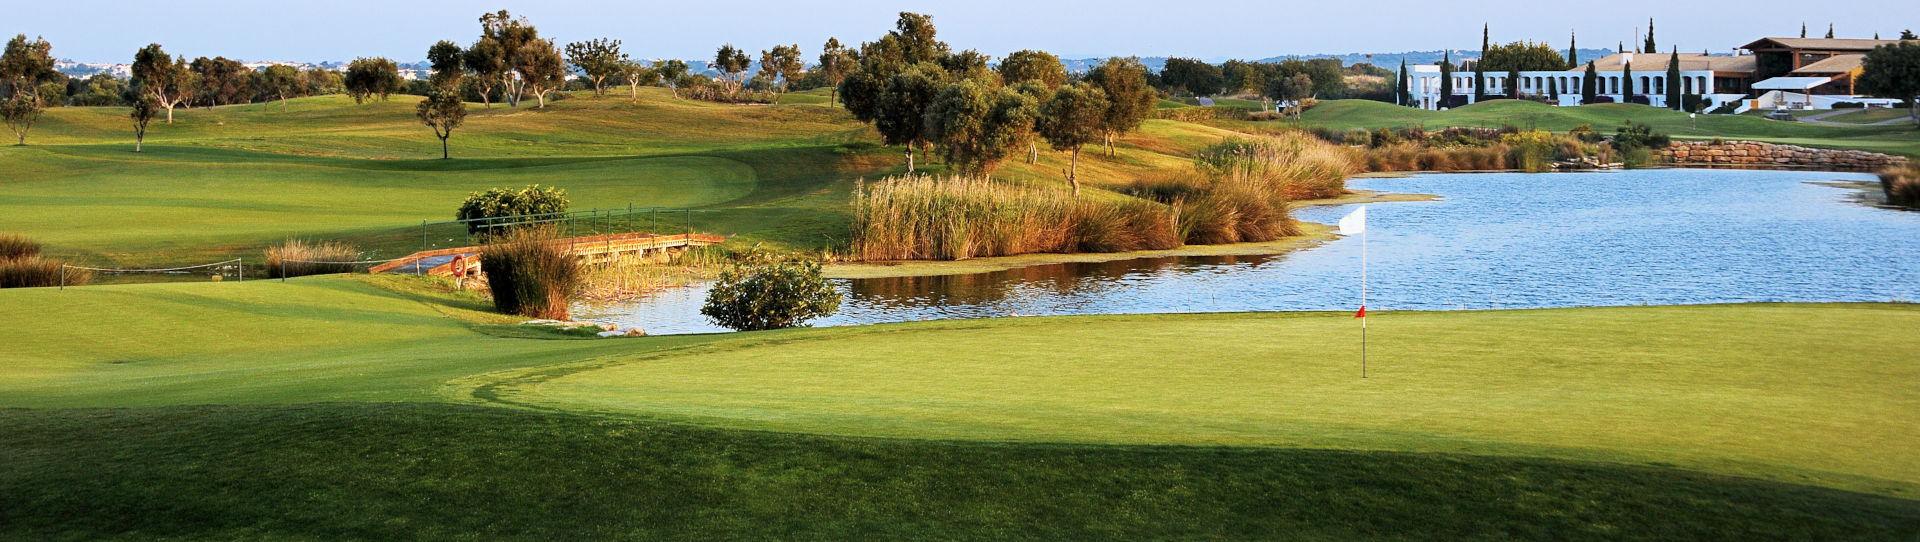 Portugal golf courses - Vilamoura Victoria golf course - Photo 1